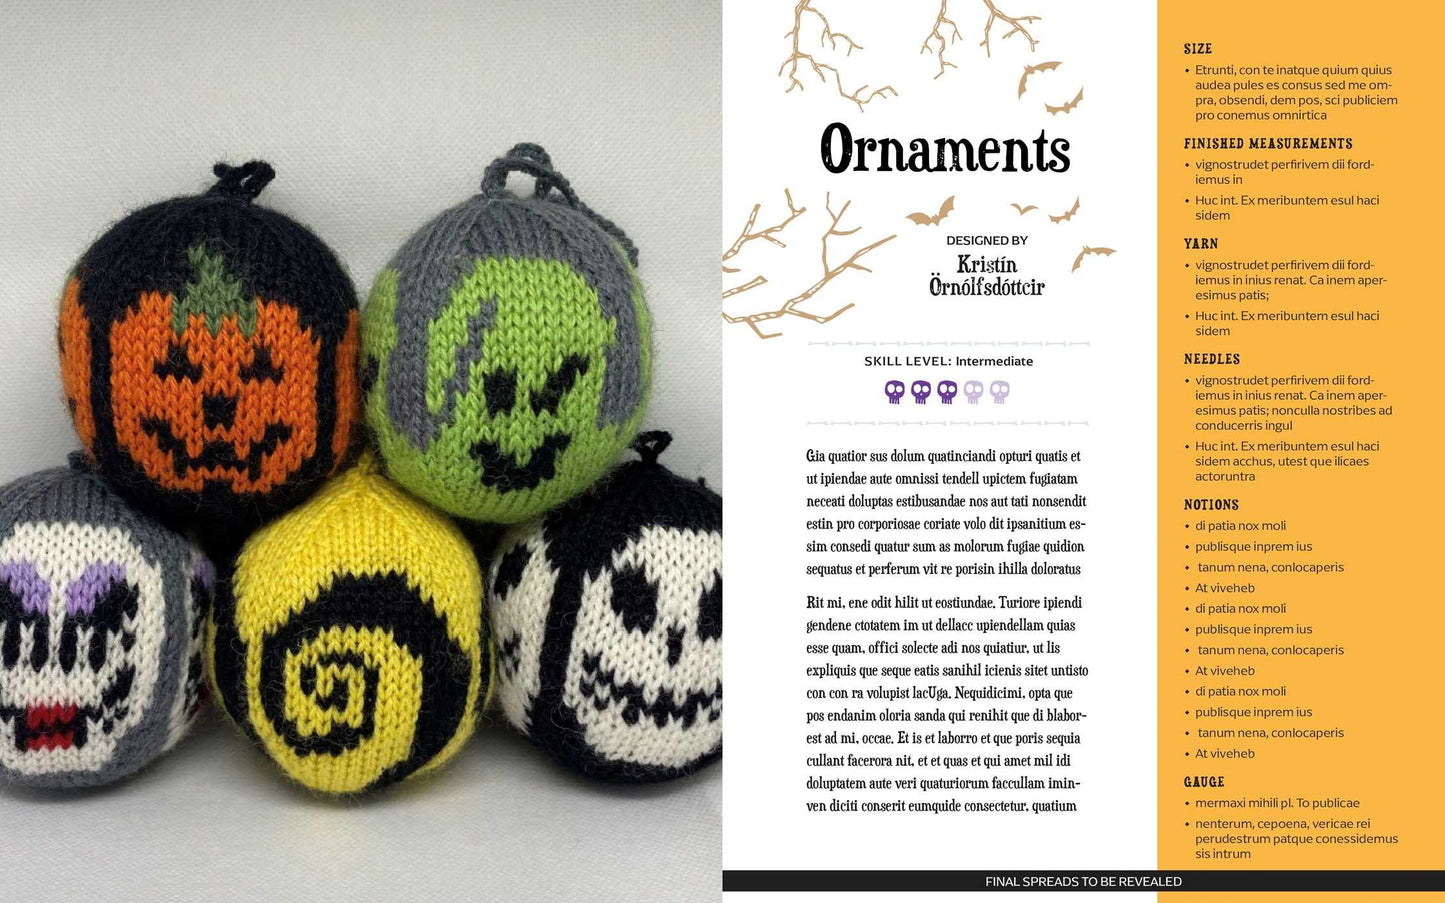 Disney Tim Burton's The Nightmare Before Christmas Crochet (Crochet Kits)  (Mixed media product)